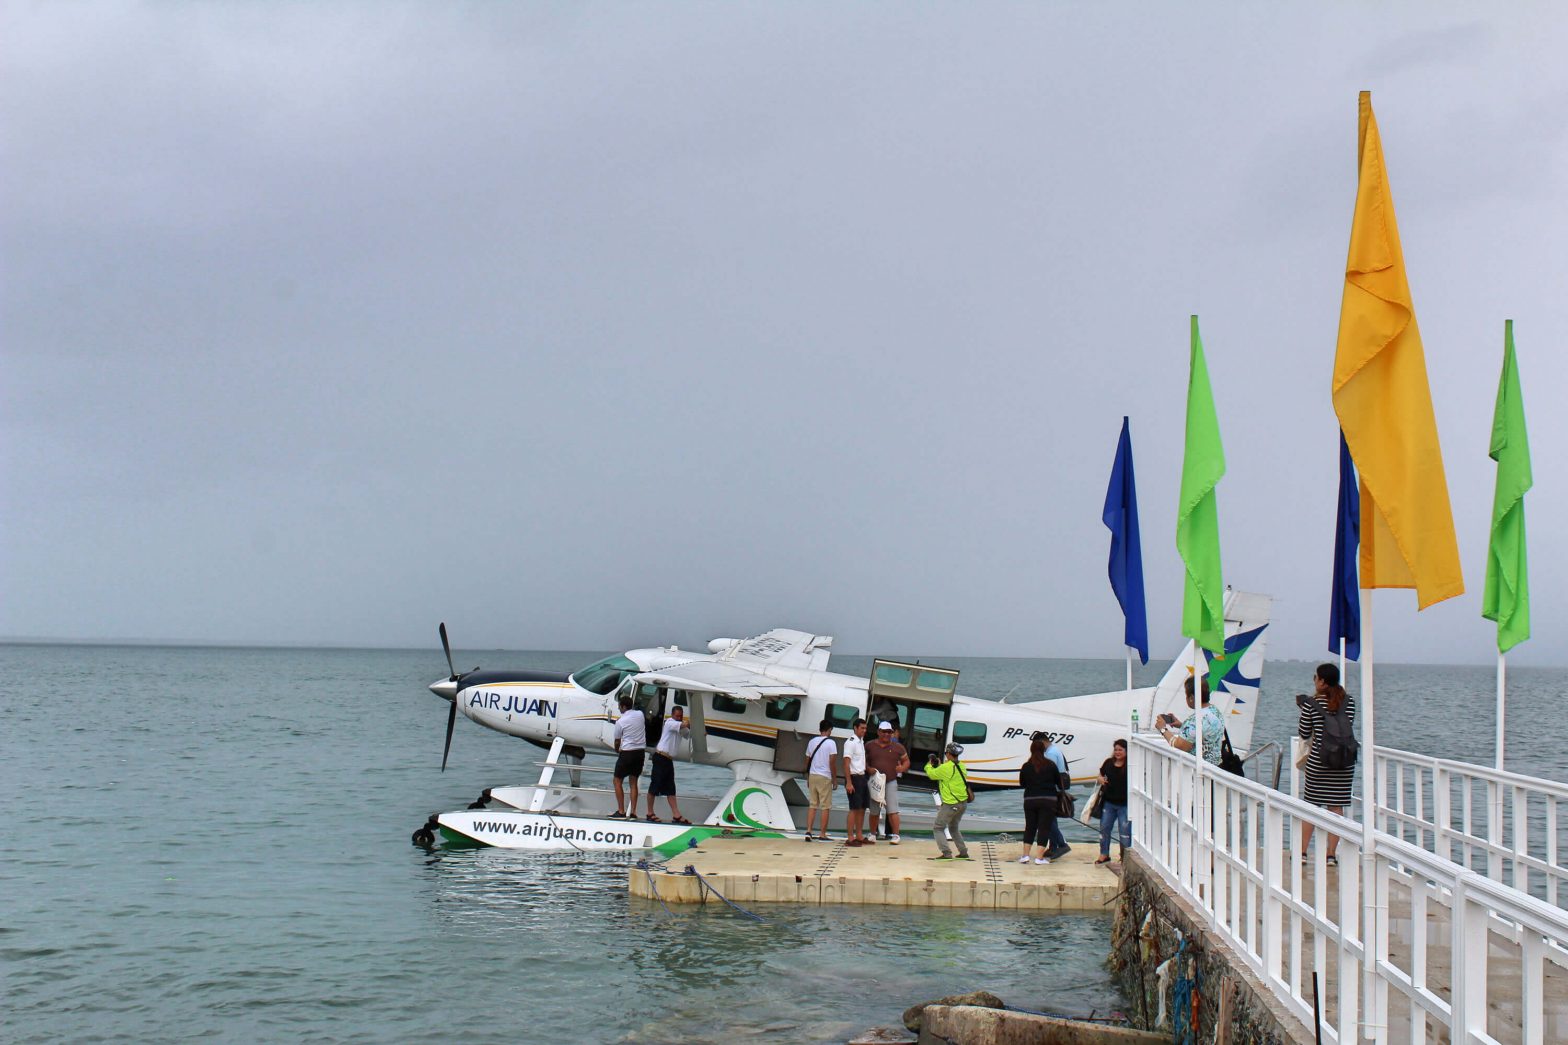 Air Juan to start flights soon from seaplane terminal in SRP, Cebu City